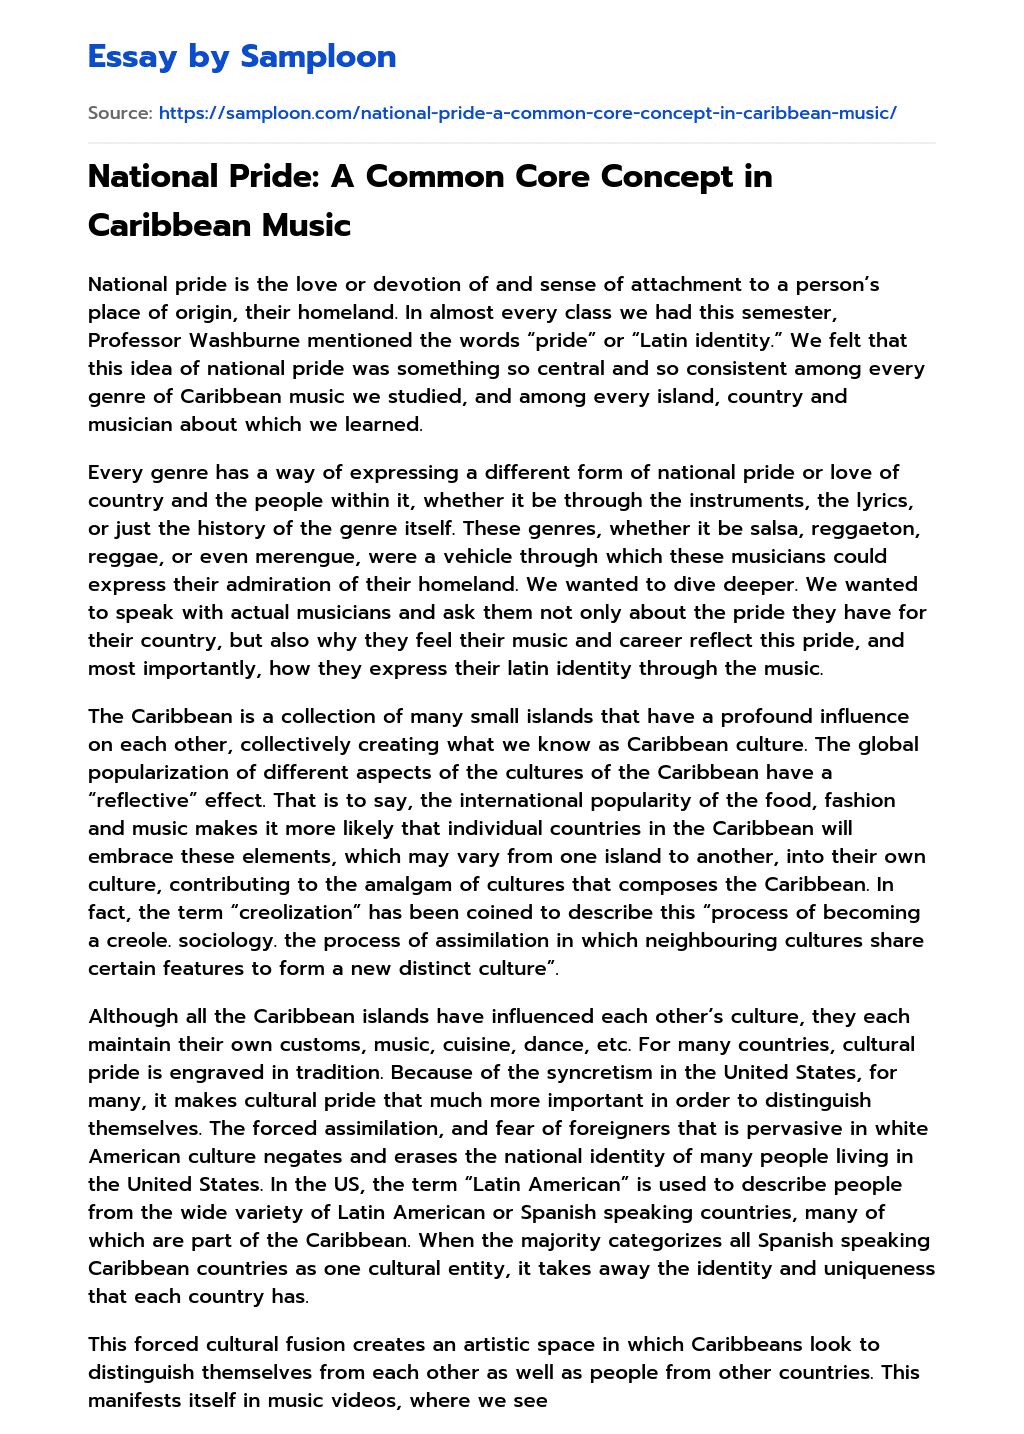 National Pride: A Common Core Concept in Caribbean Music essay